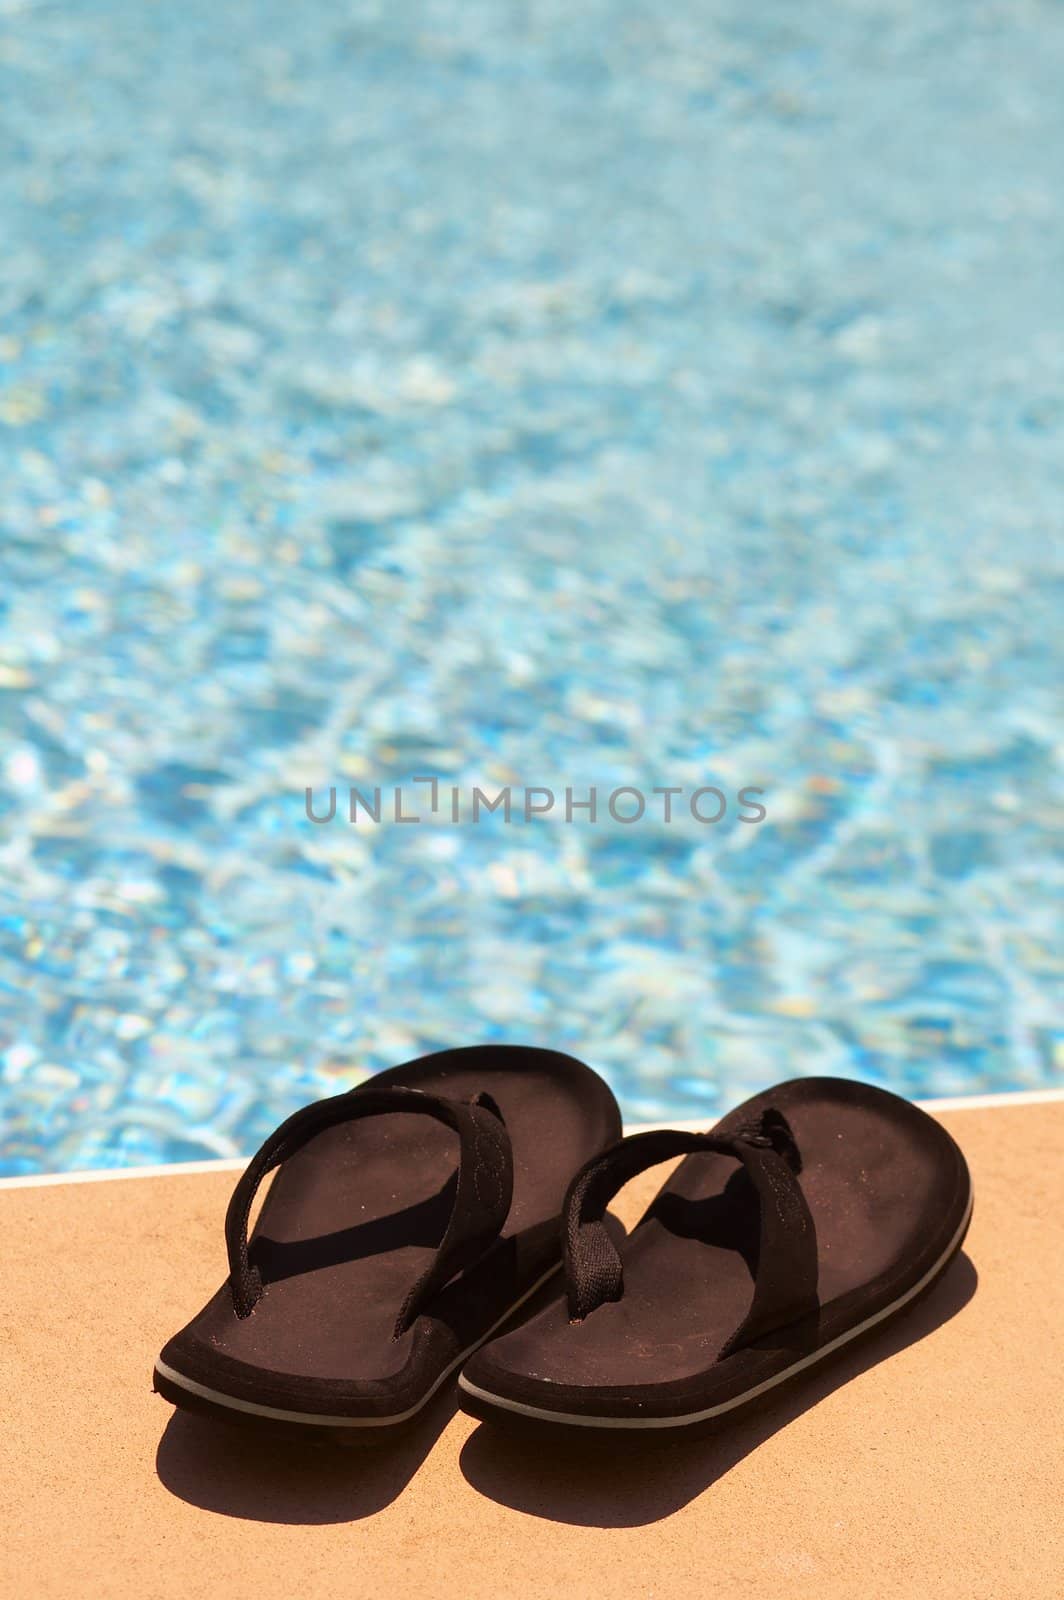 summer pool scene